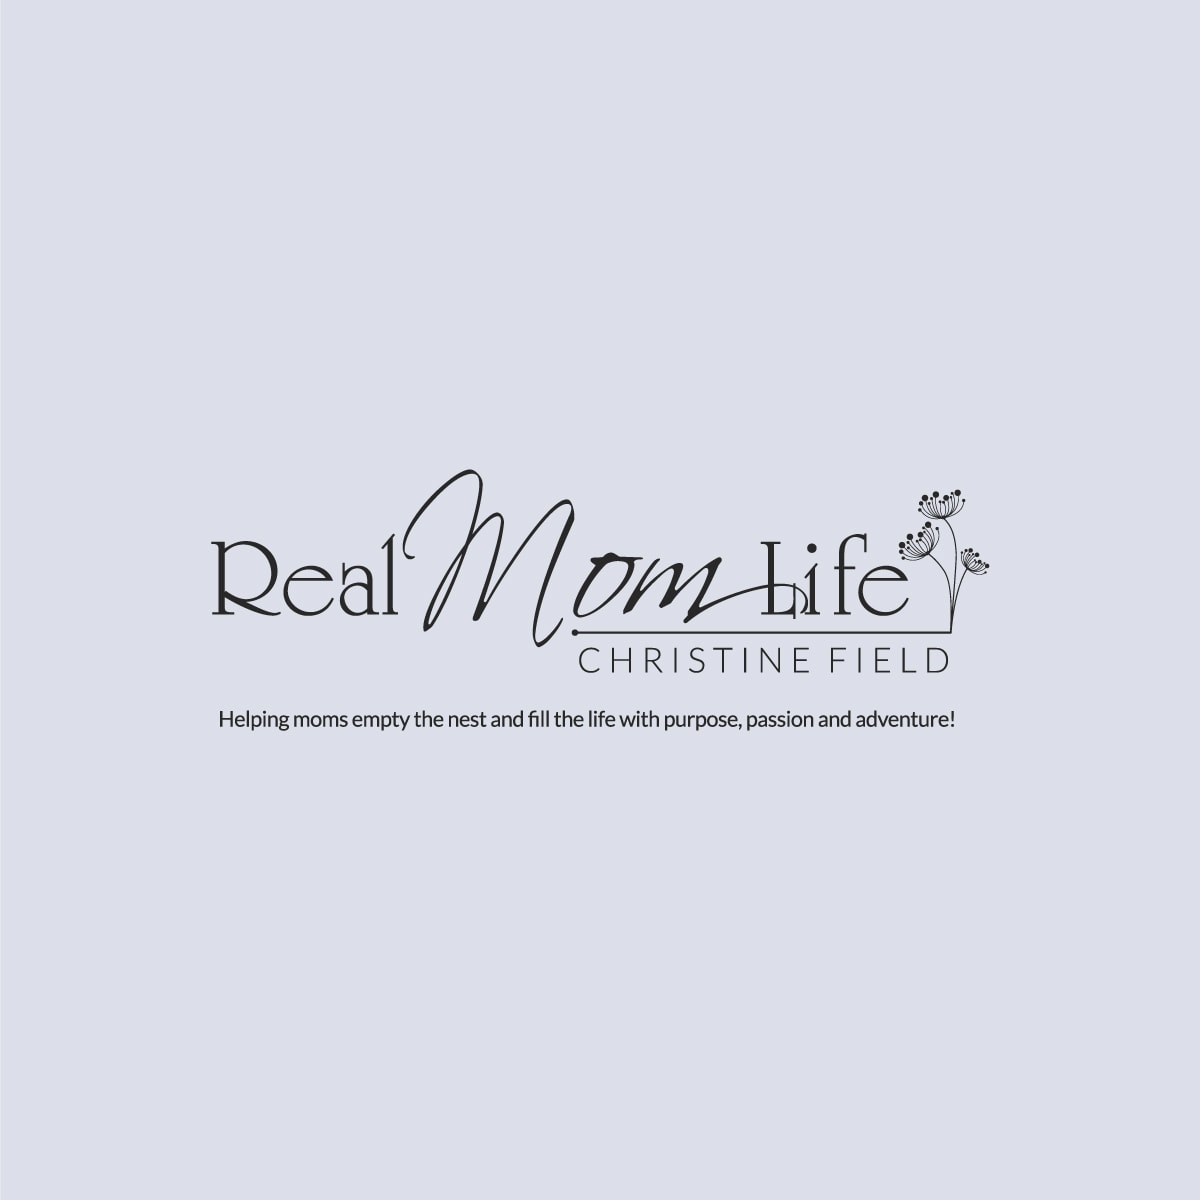 Real Mom Life Blog Main Logo monochromatic on light background